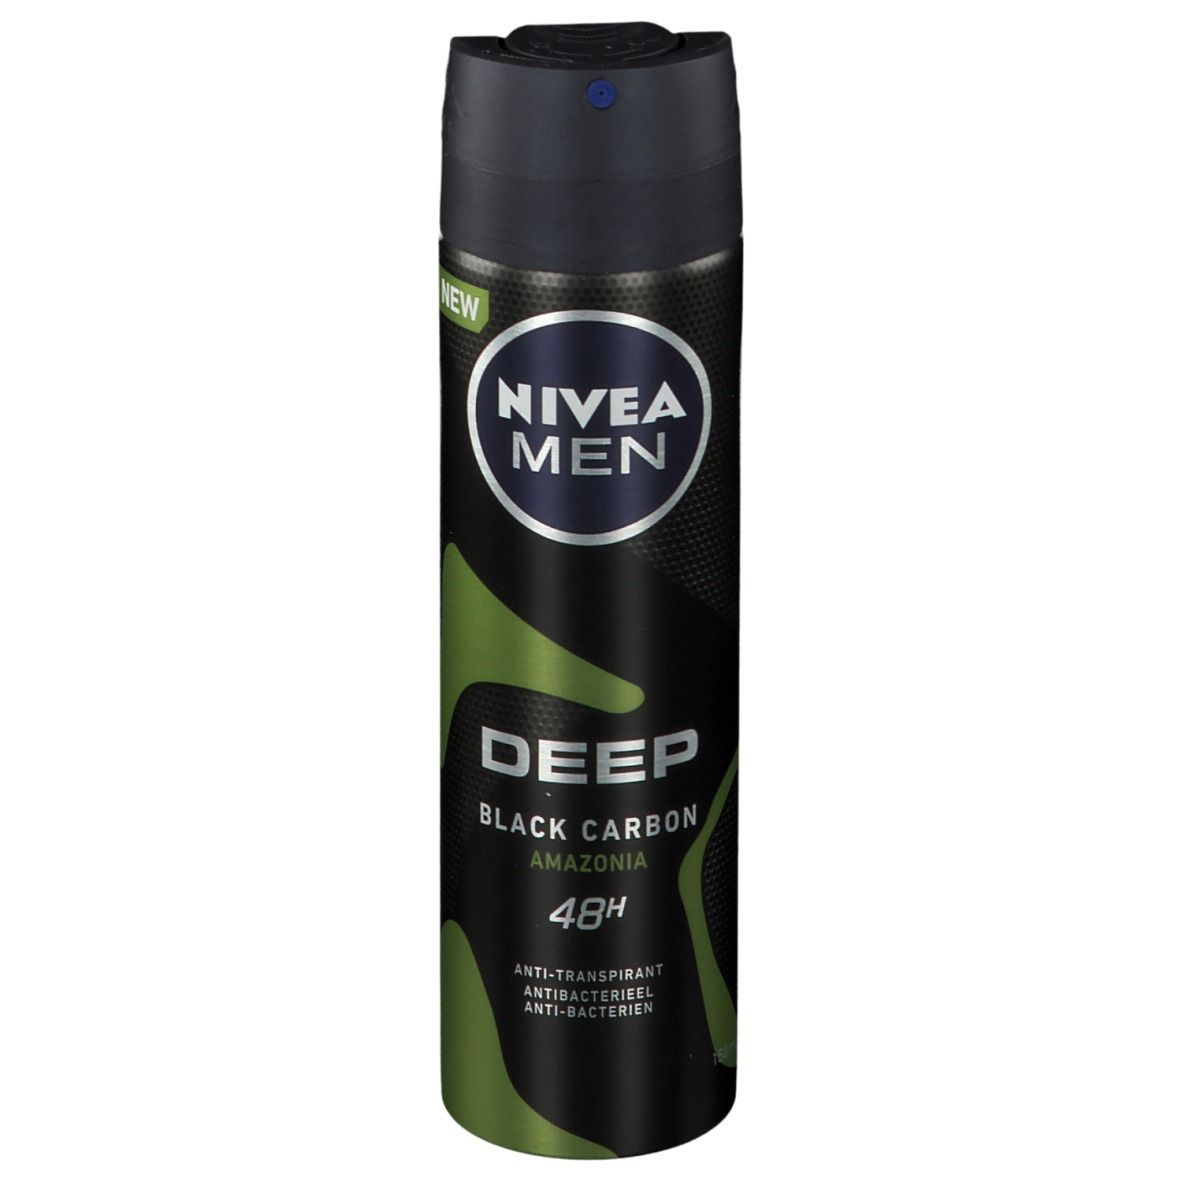 Nivea MEN Deep Black Carbon Amazonia Déodorant Spray 48h